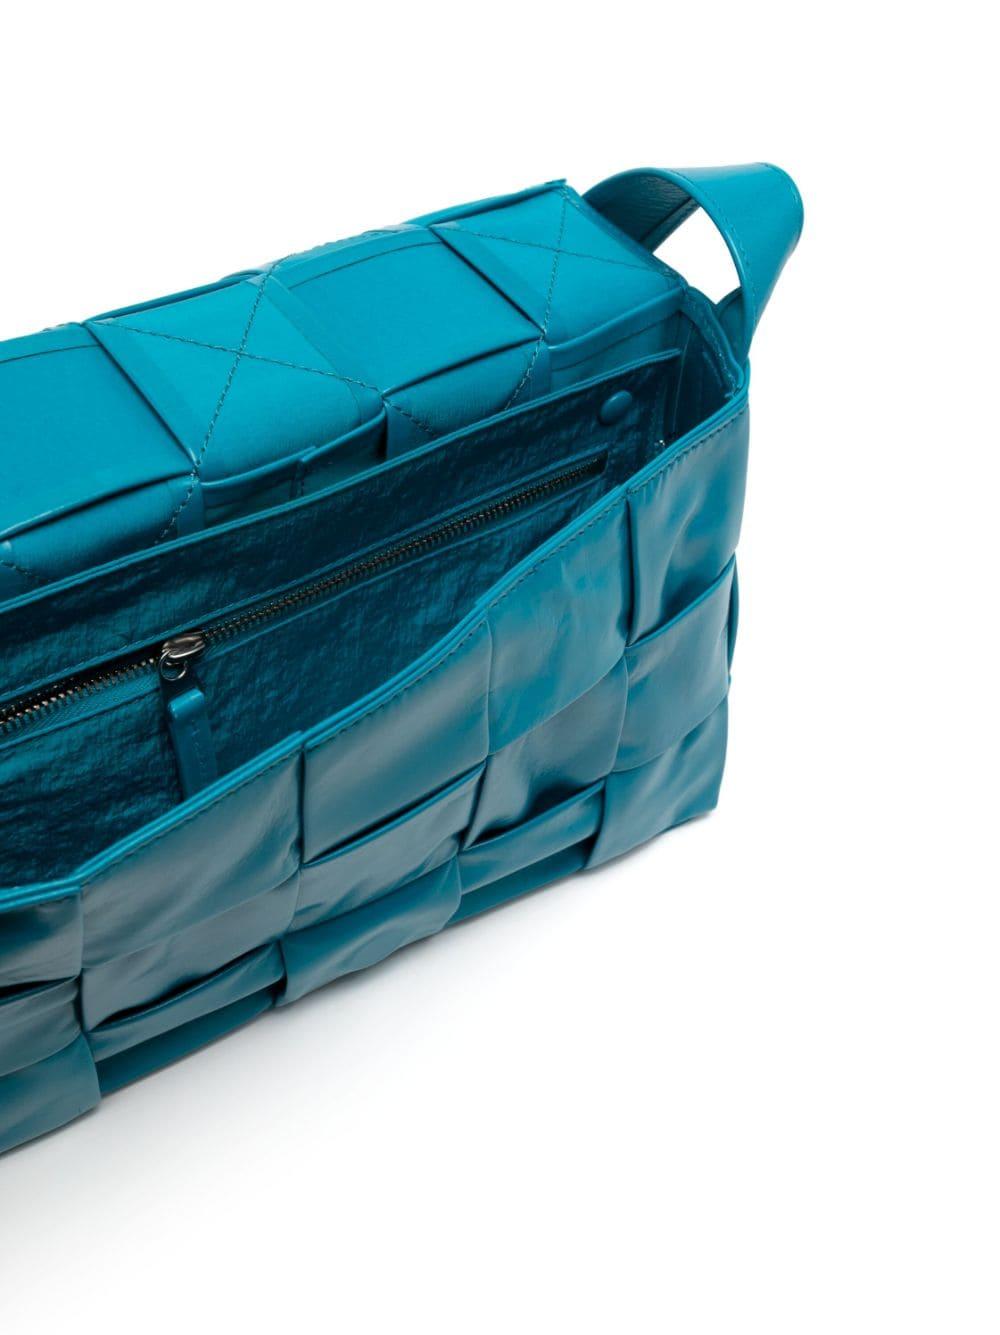 Bottega Veneta Small Cassette Crossbody Bag Teal In Excellent Condition In London, GB